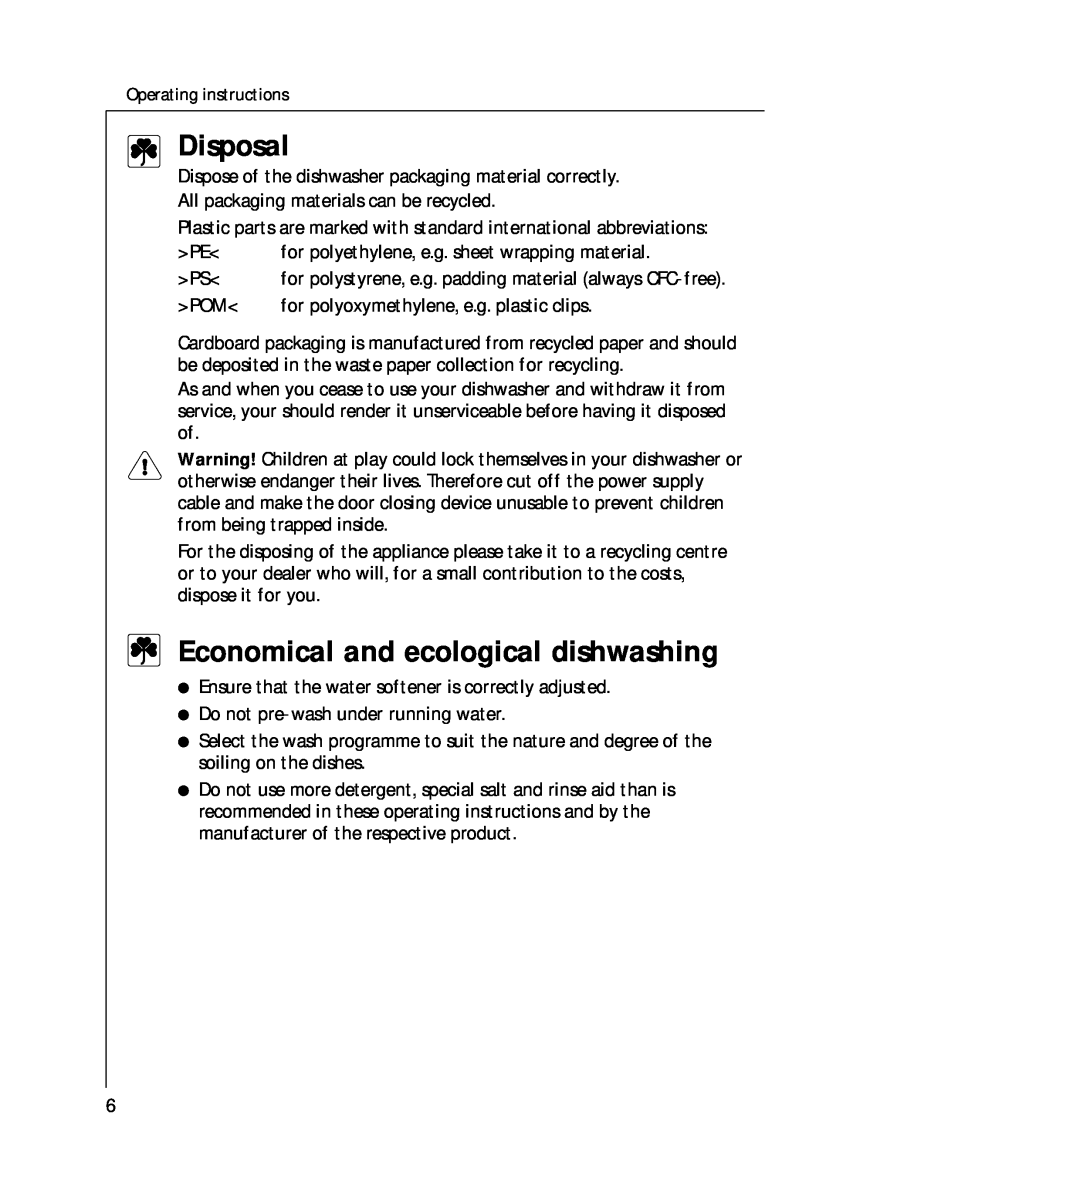 AEG 44060 VIL manual Disposal, Economical and ecological dishwashing 